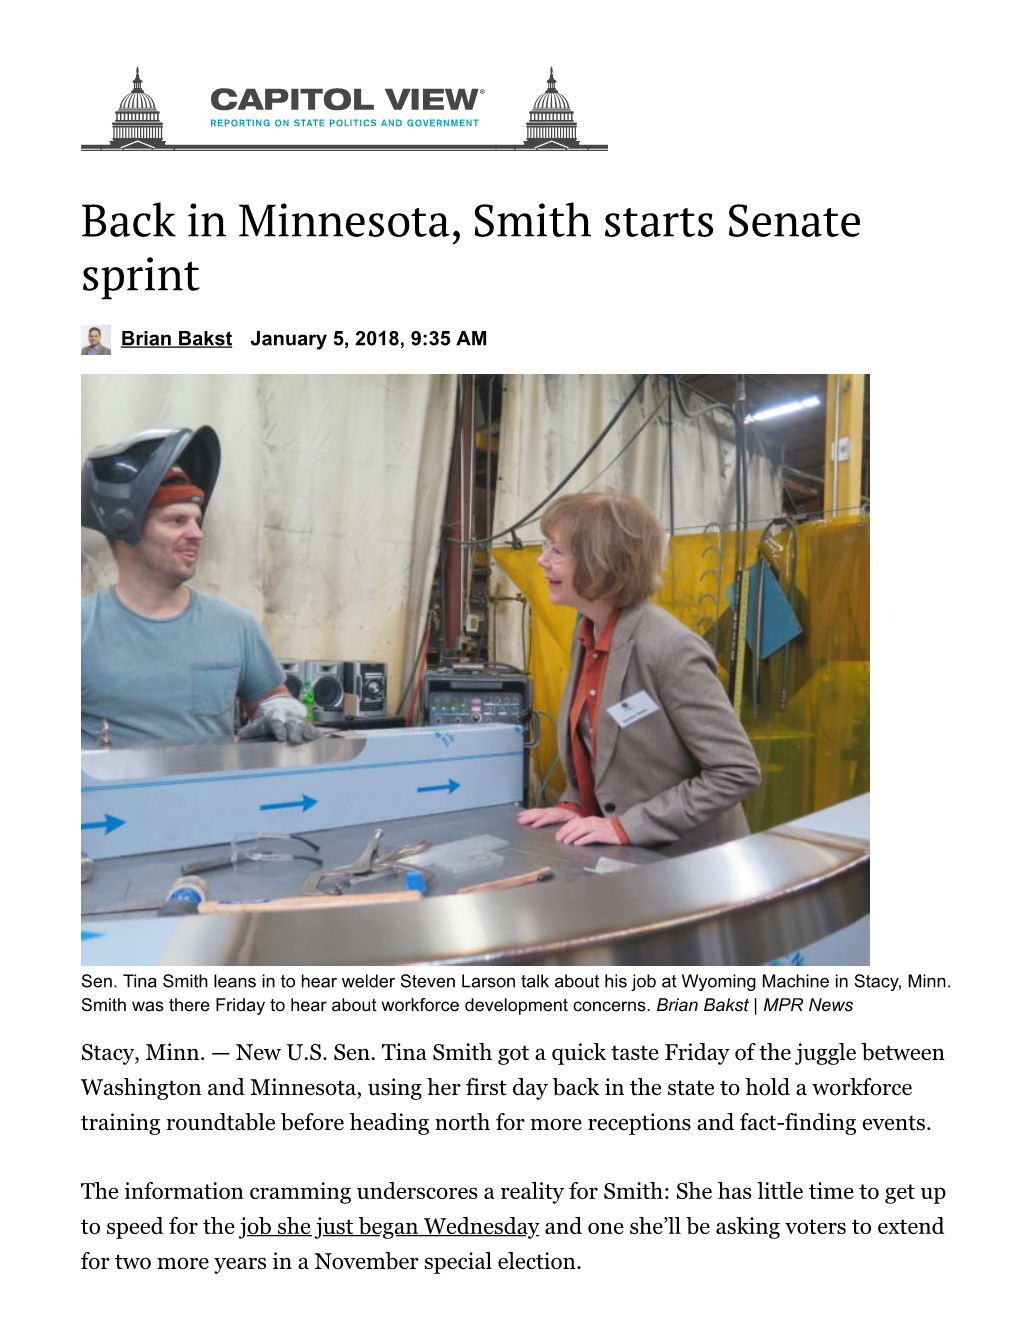 Back in Minnesota, Smith Starts Senate Sprint